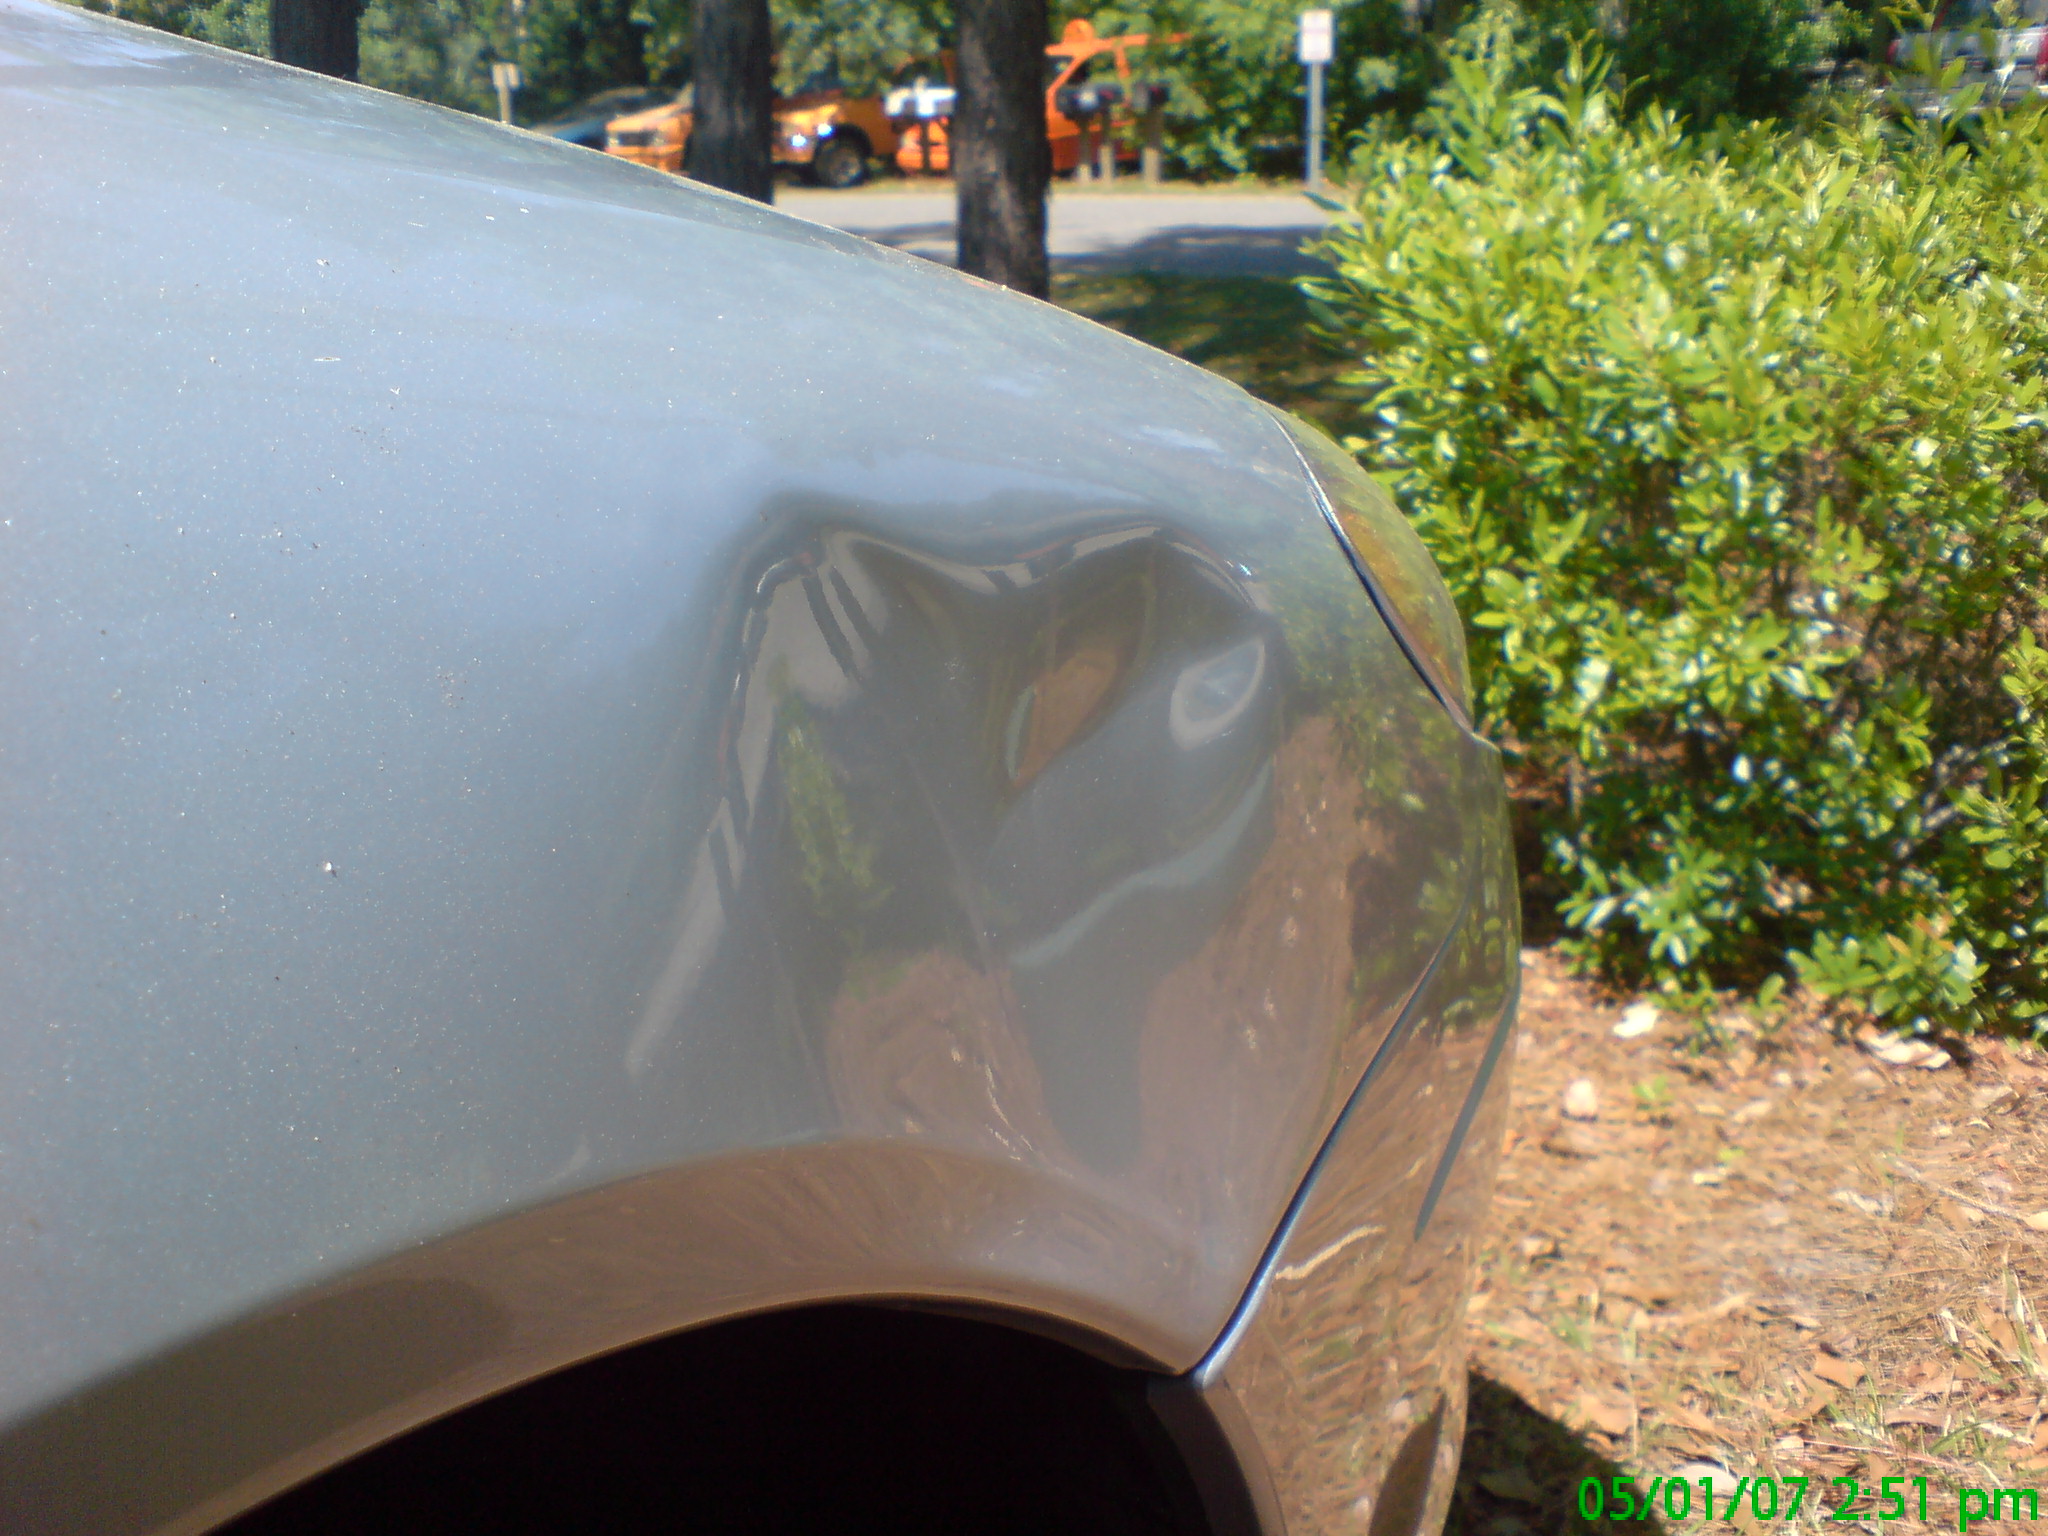 Ford Taurus-Holy City Dent Guy-Paintless dent repair-